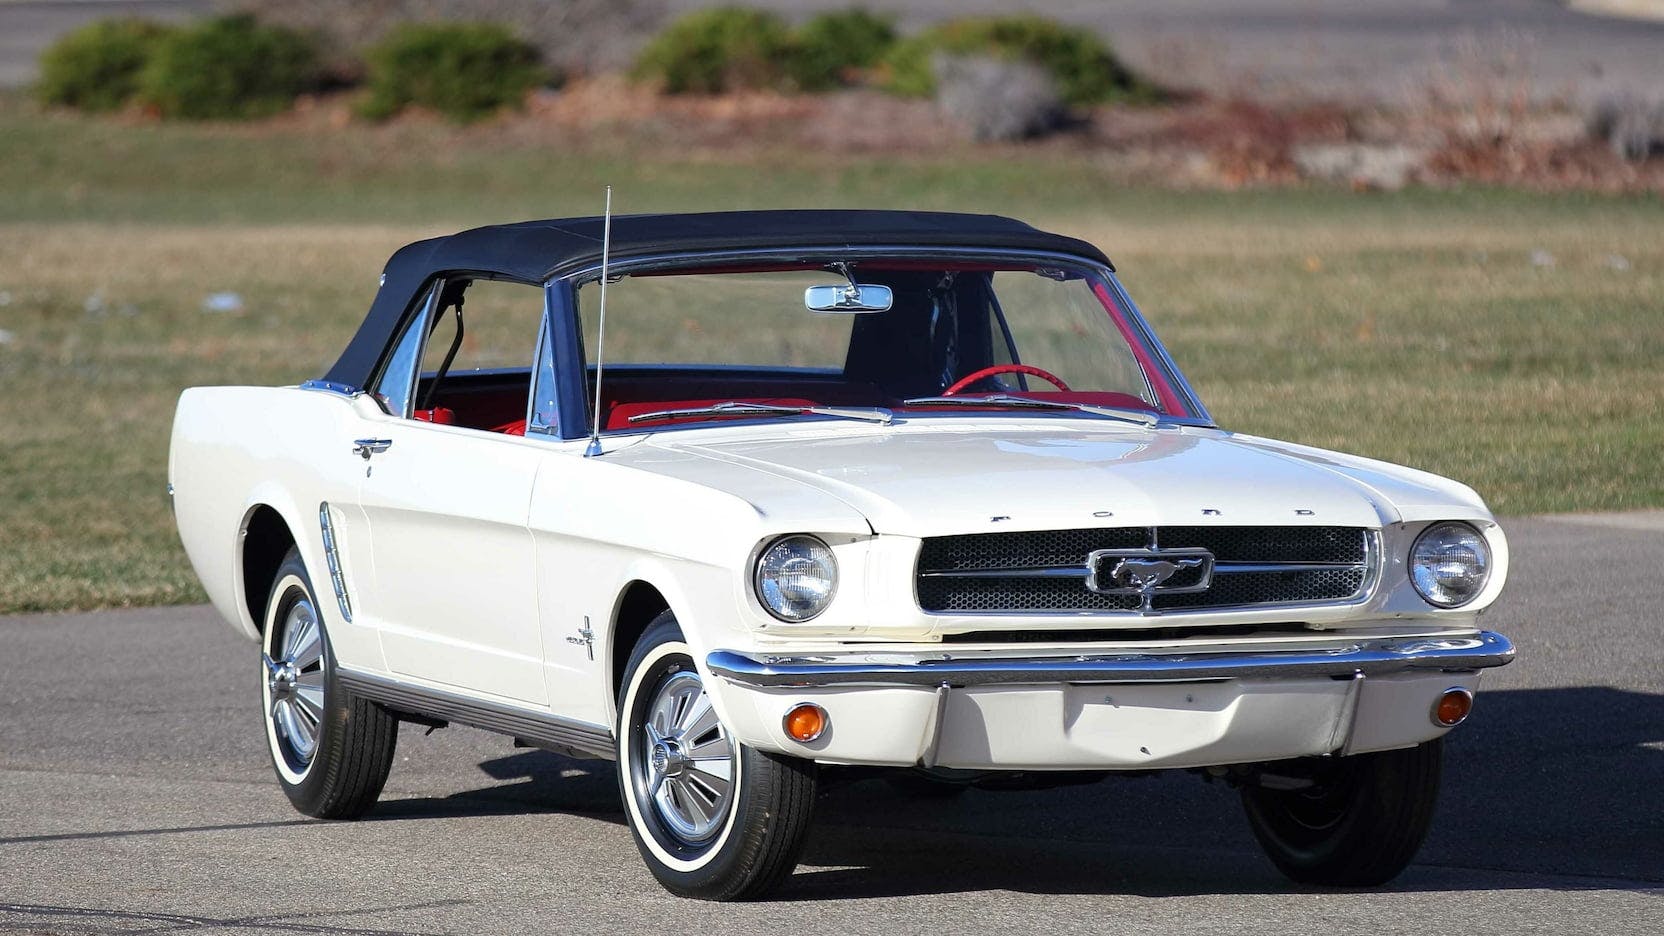 1965 Magic Skyway Mustang Convertible front three-quarter